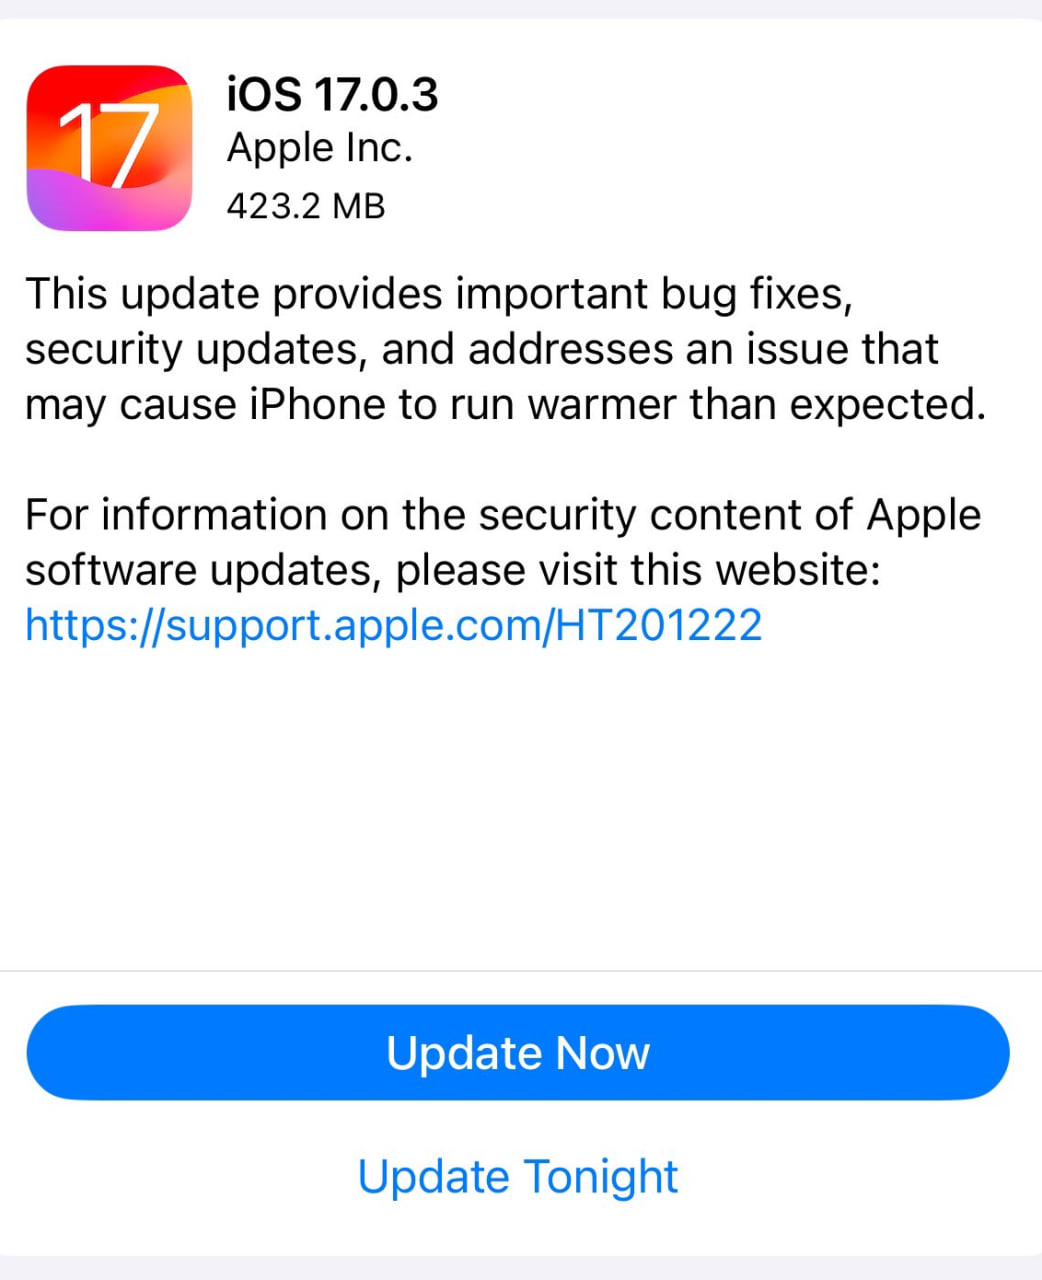 Apple iOS 17.0.3 update fixes